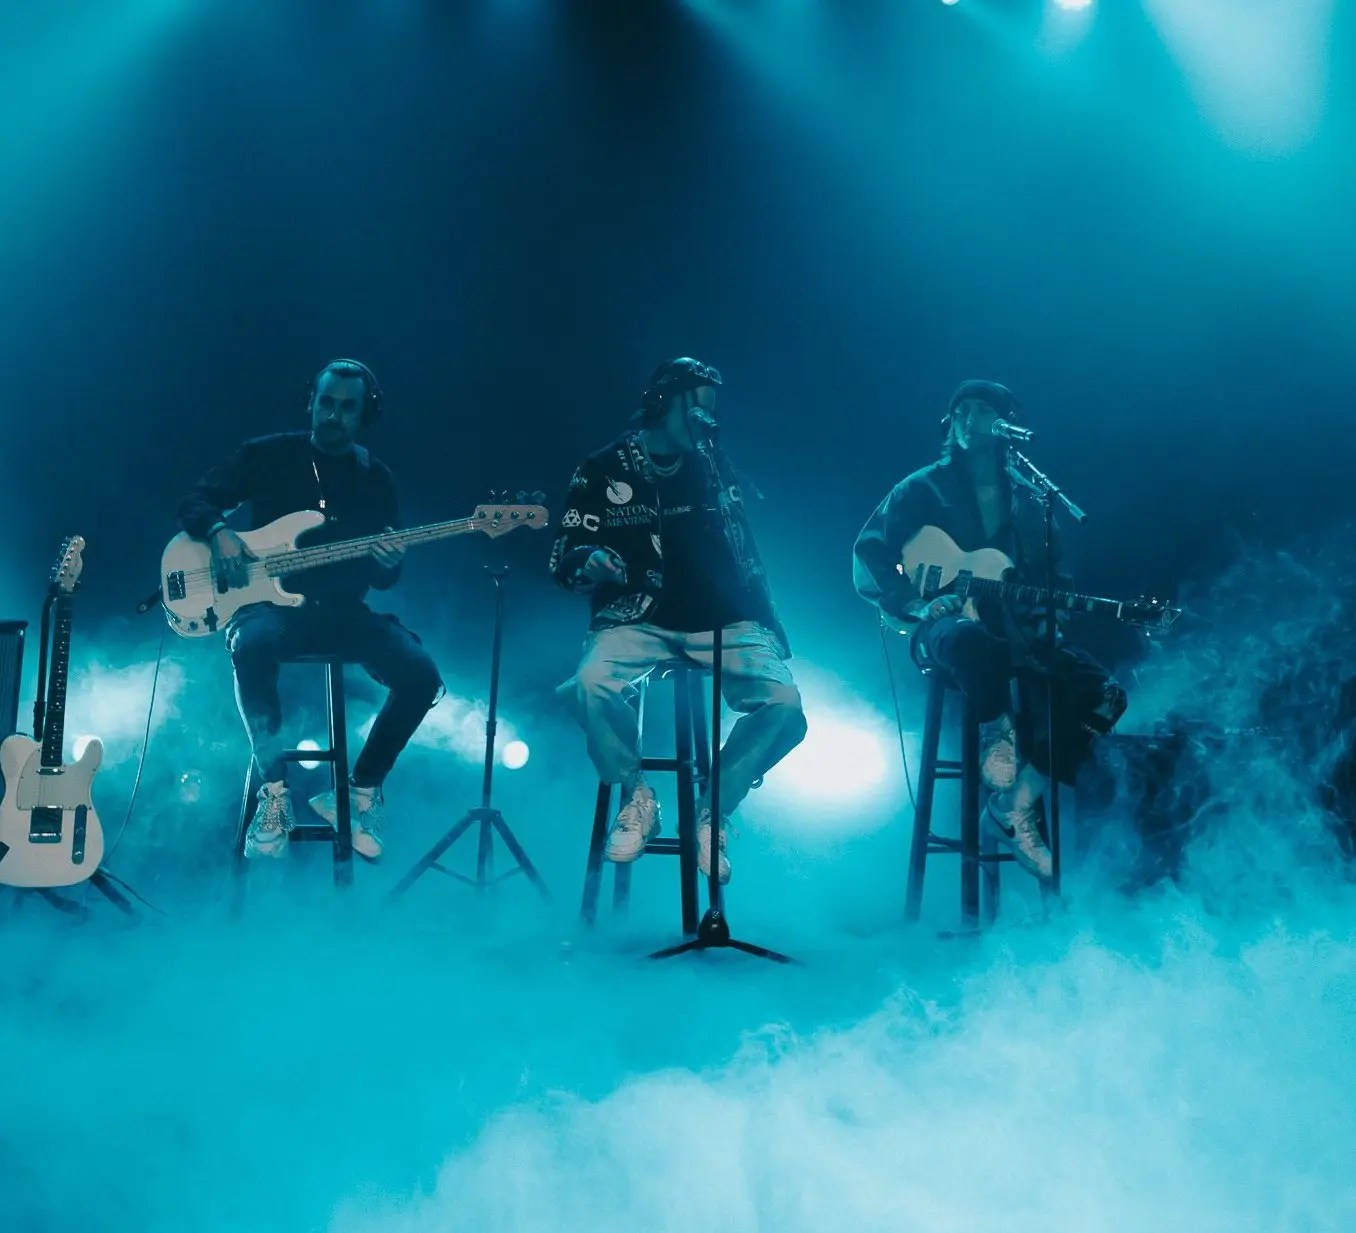 En gruppe mennesker på scenen med guitarer og røg Wallpaper